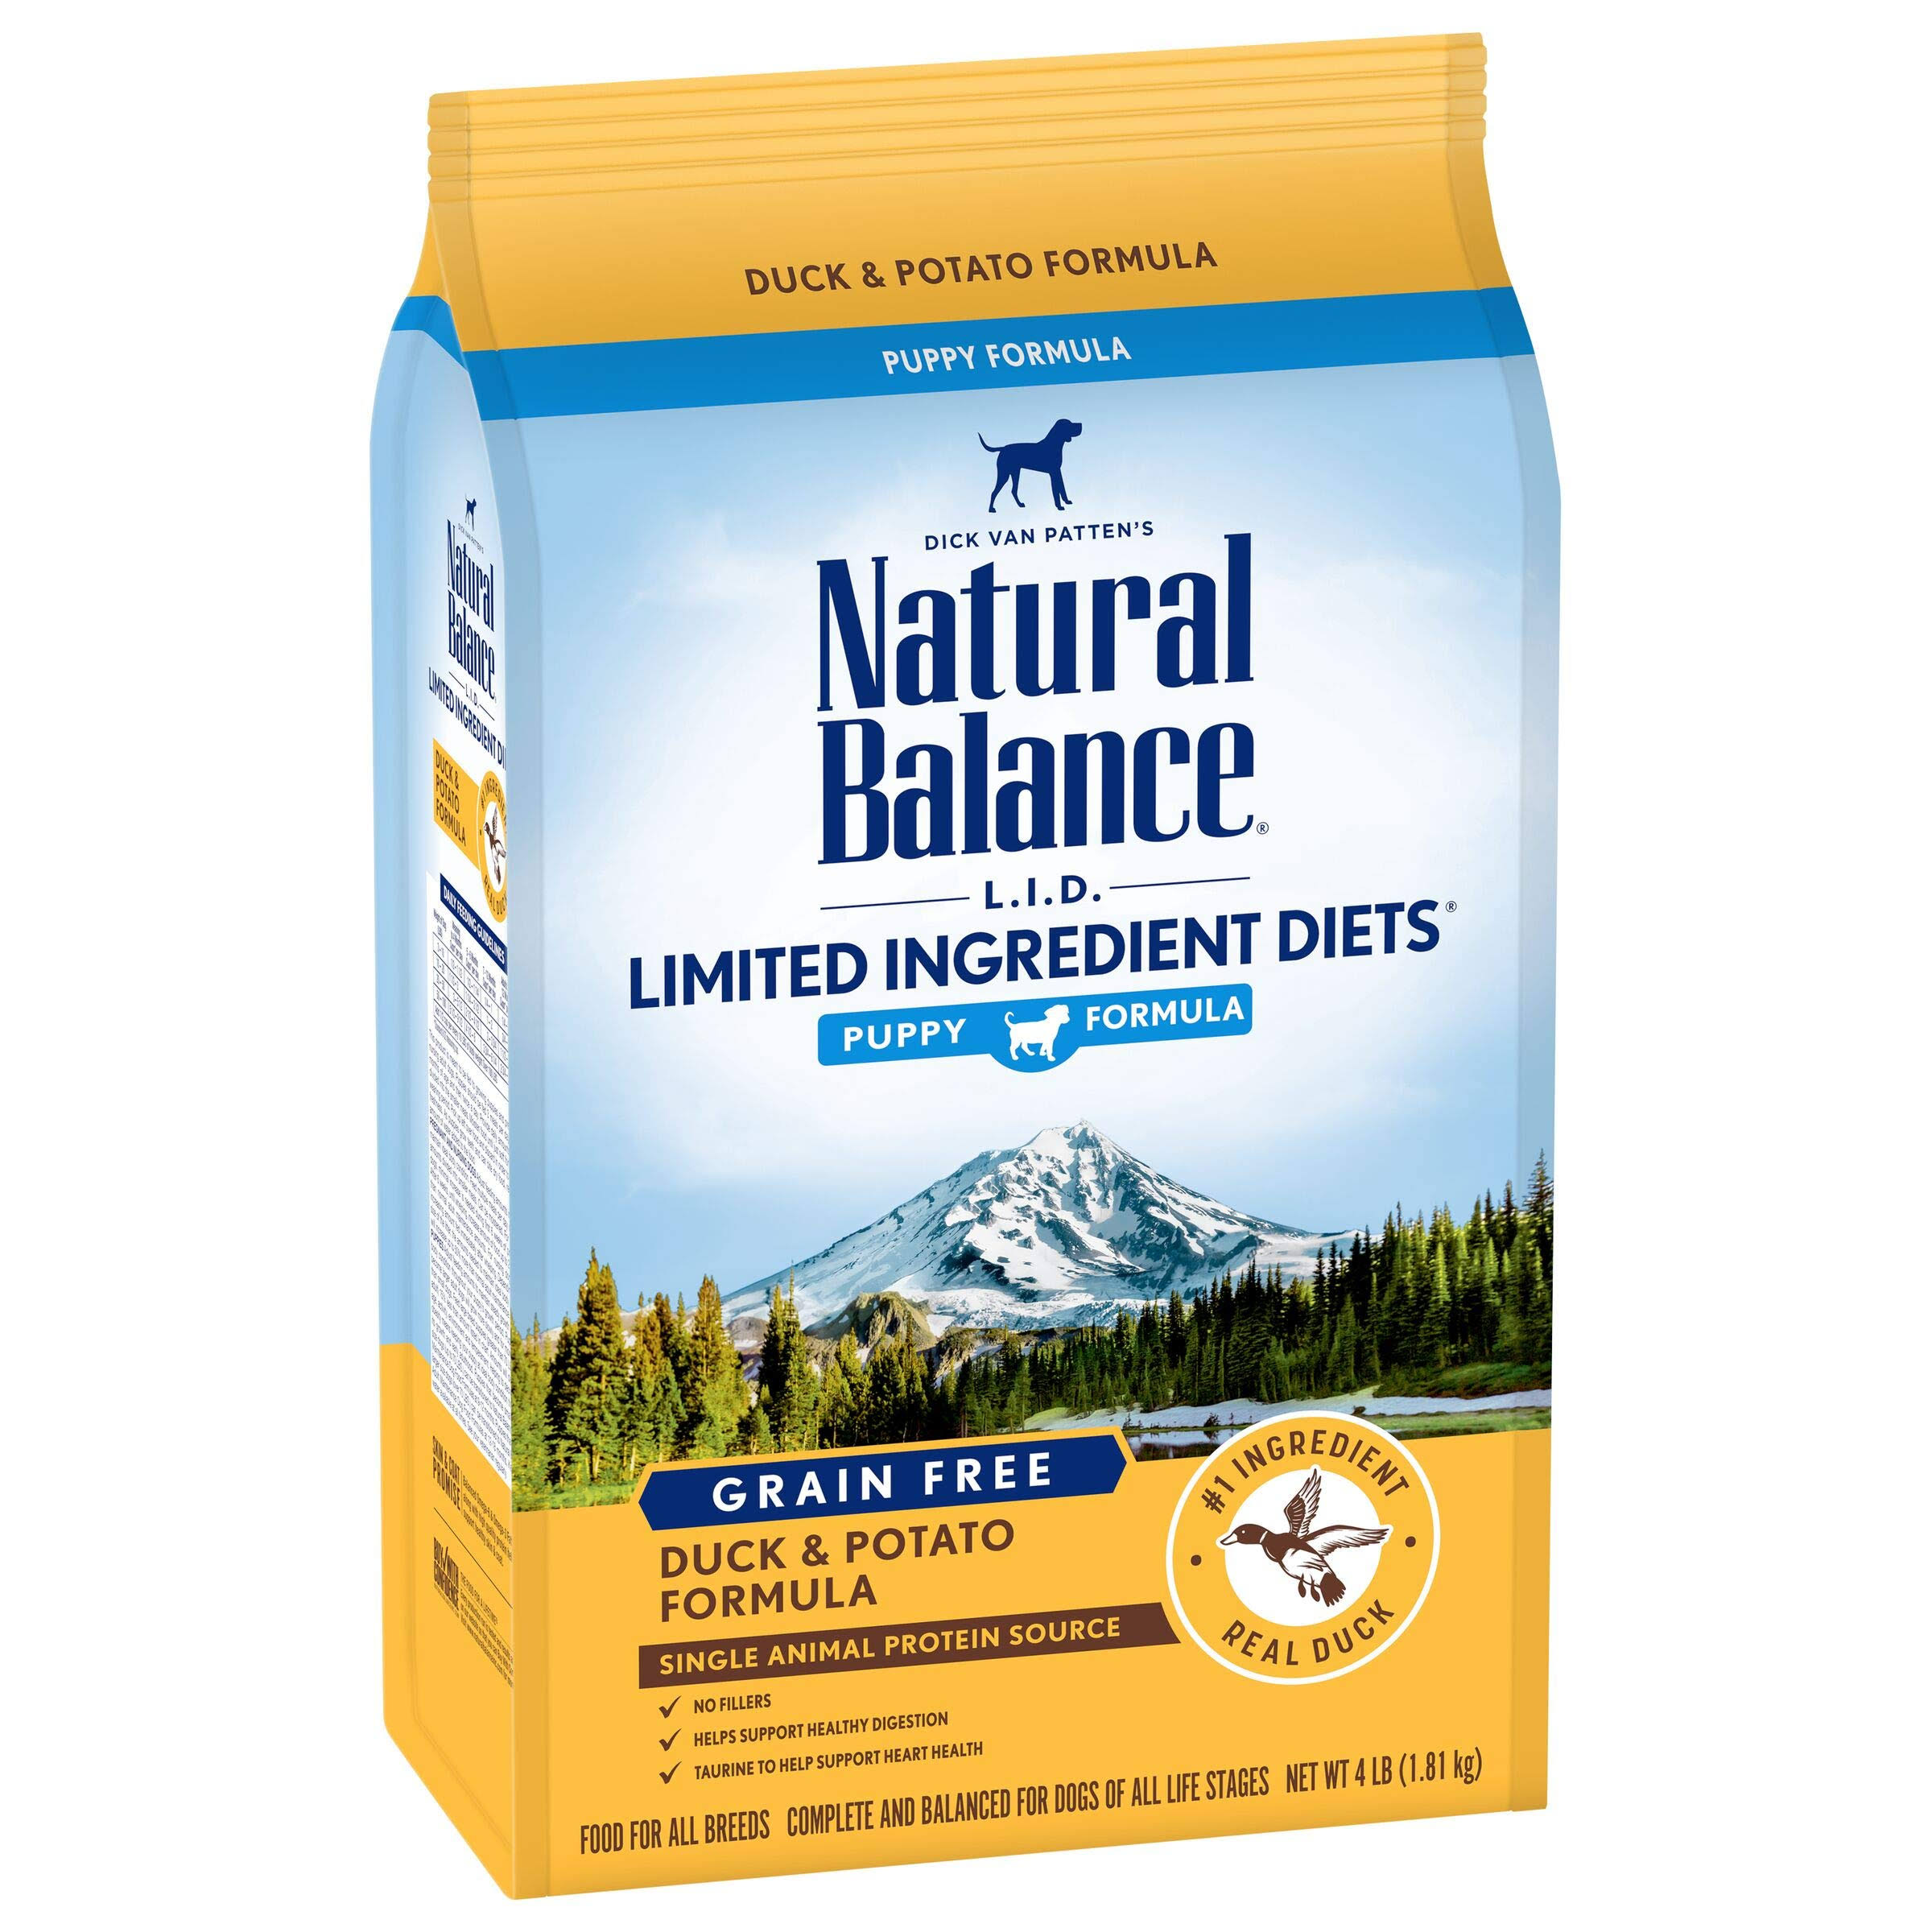 Natural Balance L.I.D. Limited Ingredient Diets Dog Food, Grain Free, Duck & Potato Formula, Puppy Formula - 4 lb